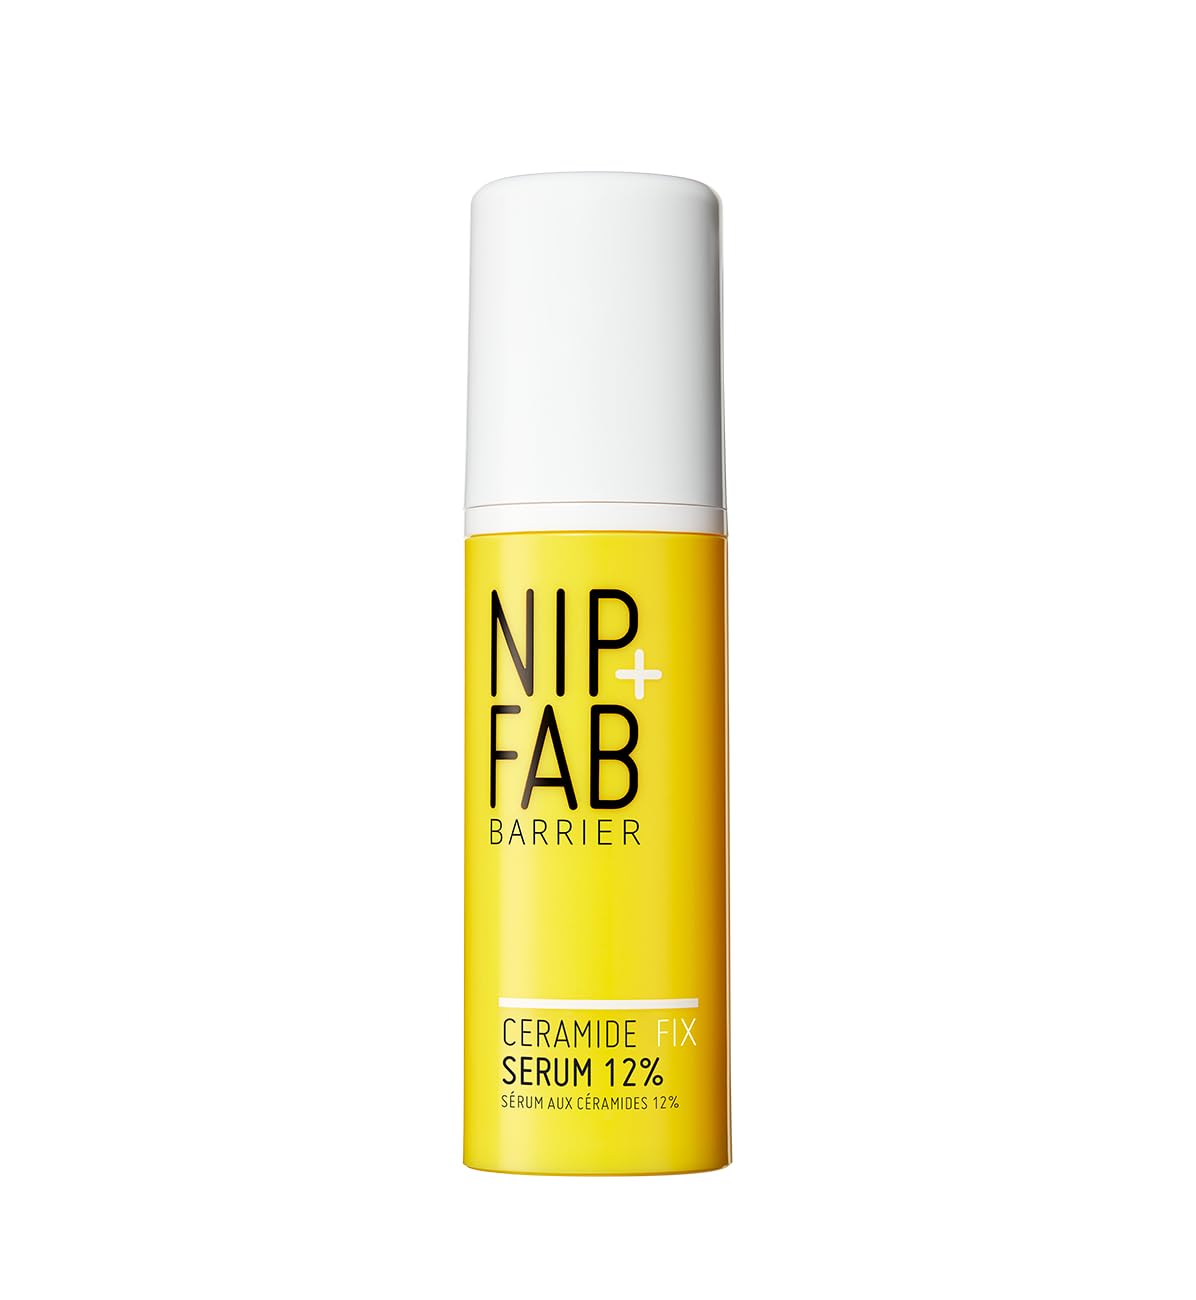 Nip+Fab Ceramide Fix Serum 12% 1.69 Fl Oz, Replenishing Ceramide-Enriched Complex, Skin Barrier Strengthener, Rebalance and Soften the Skin, with Niacinamide, Azelaic Acid and Biolin